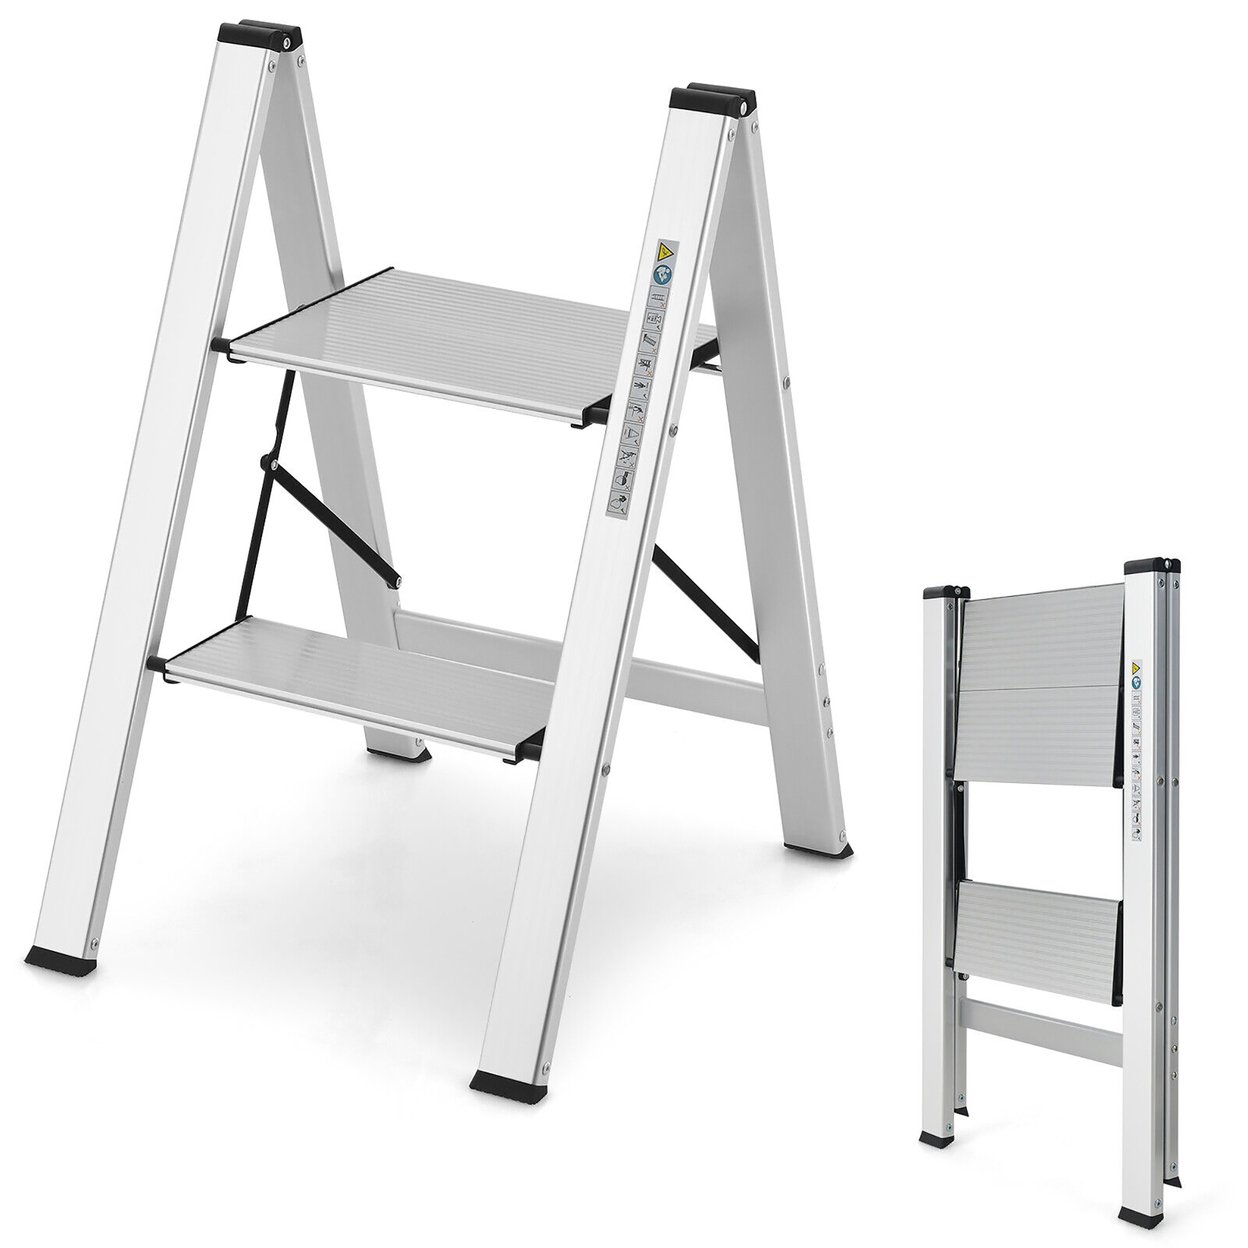 Gymax 2 Step Ladder Aluminum Folding Step Stool 330lbs Lightweight w/ Non-Slip Pedal